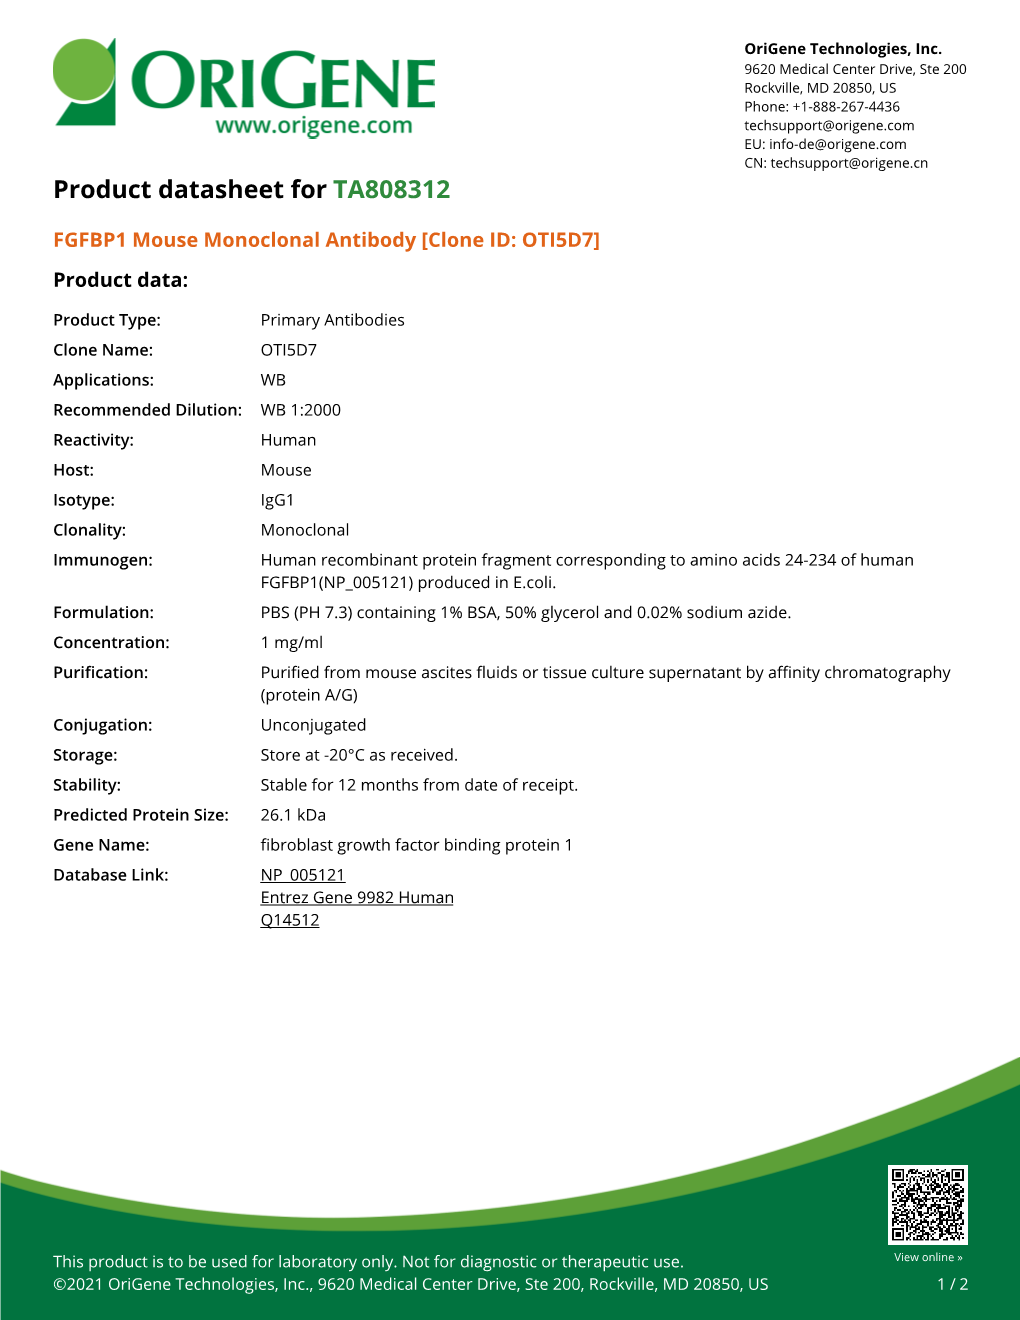 FGFBP1 Mouse Monoclonal Antibody [Clone ID: OTI5D7] Product Data